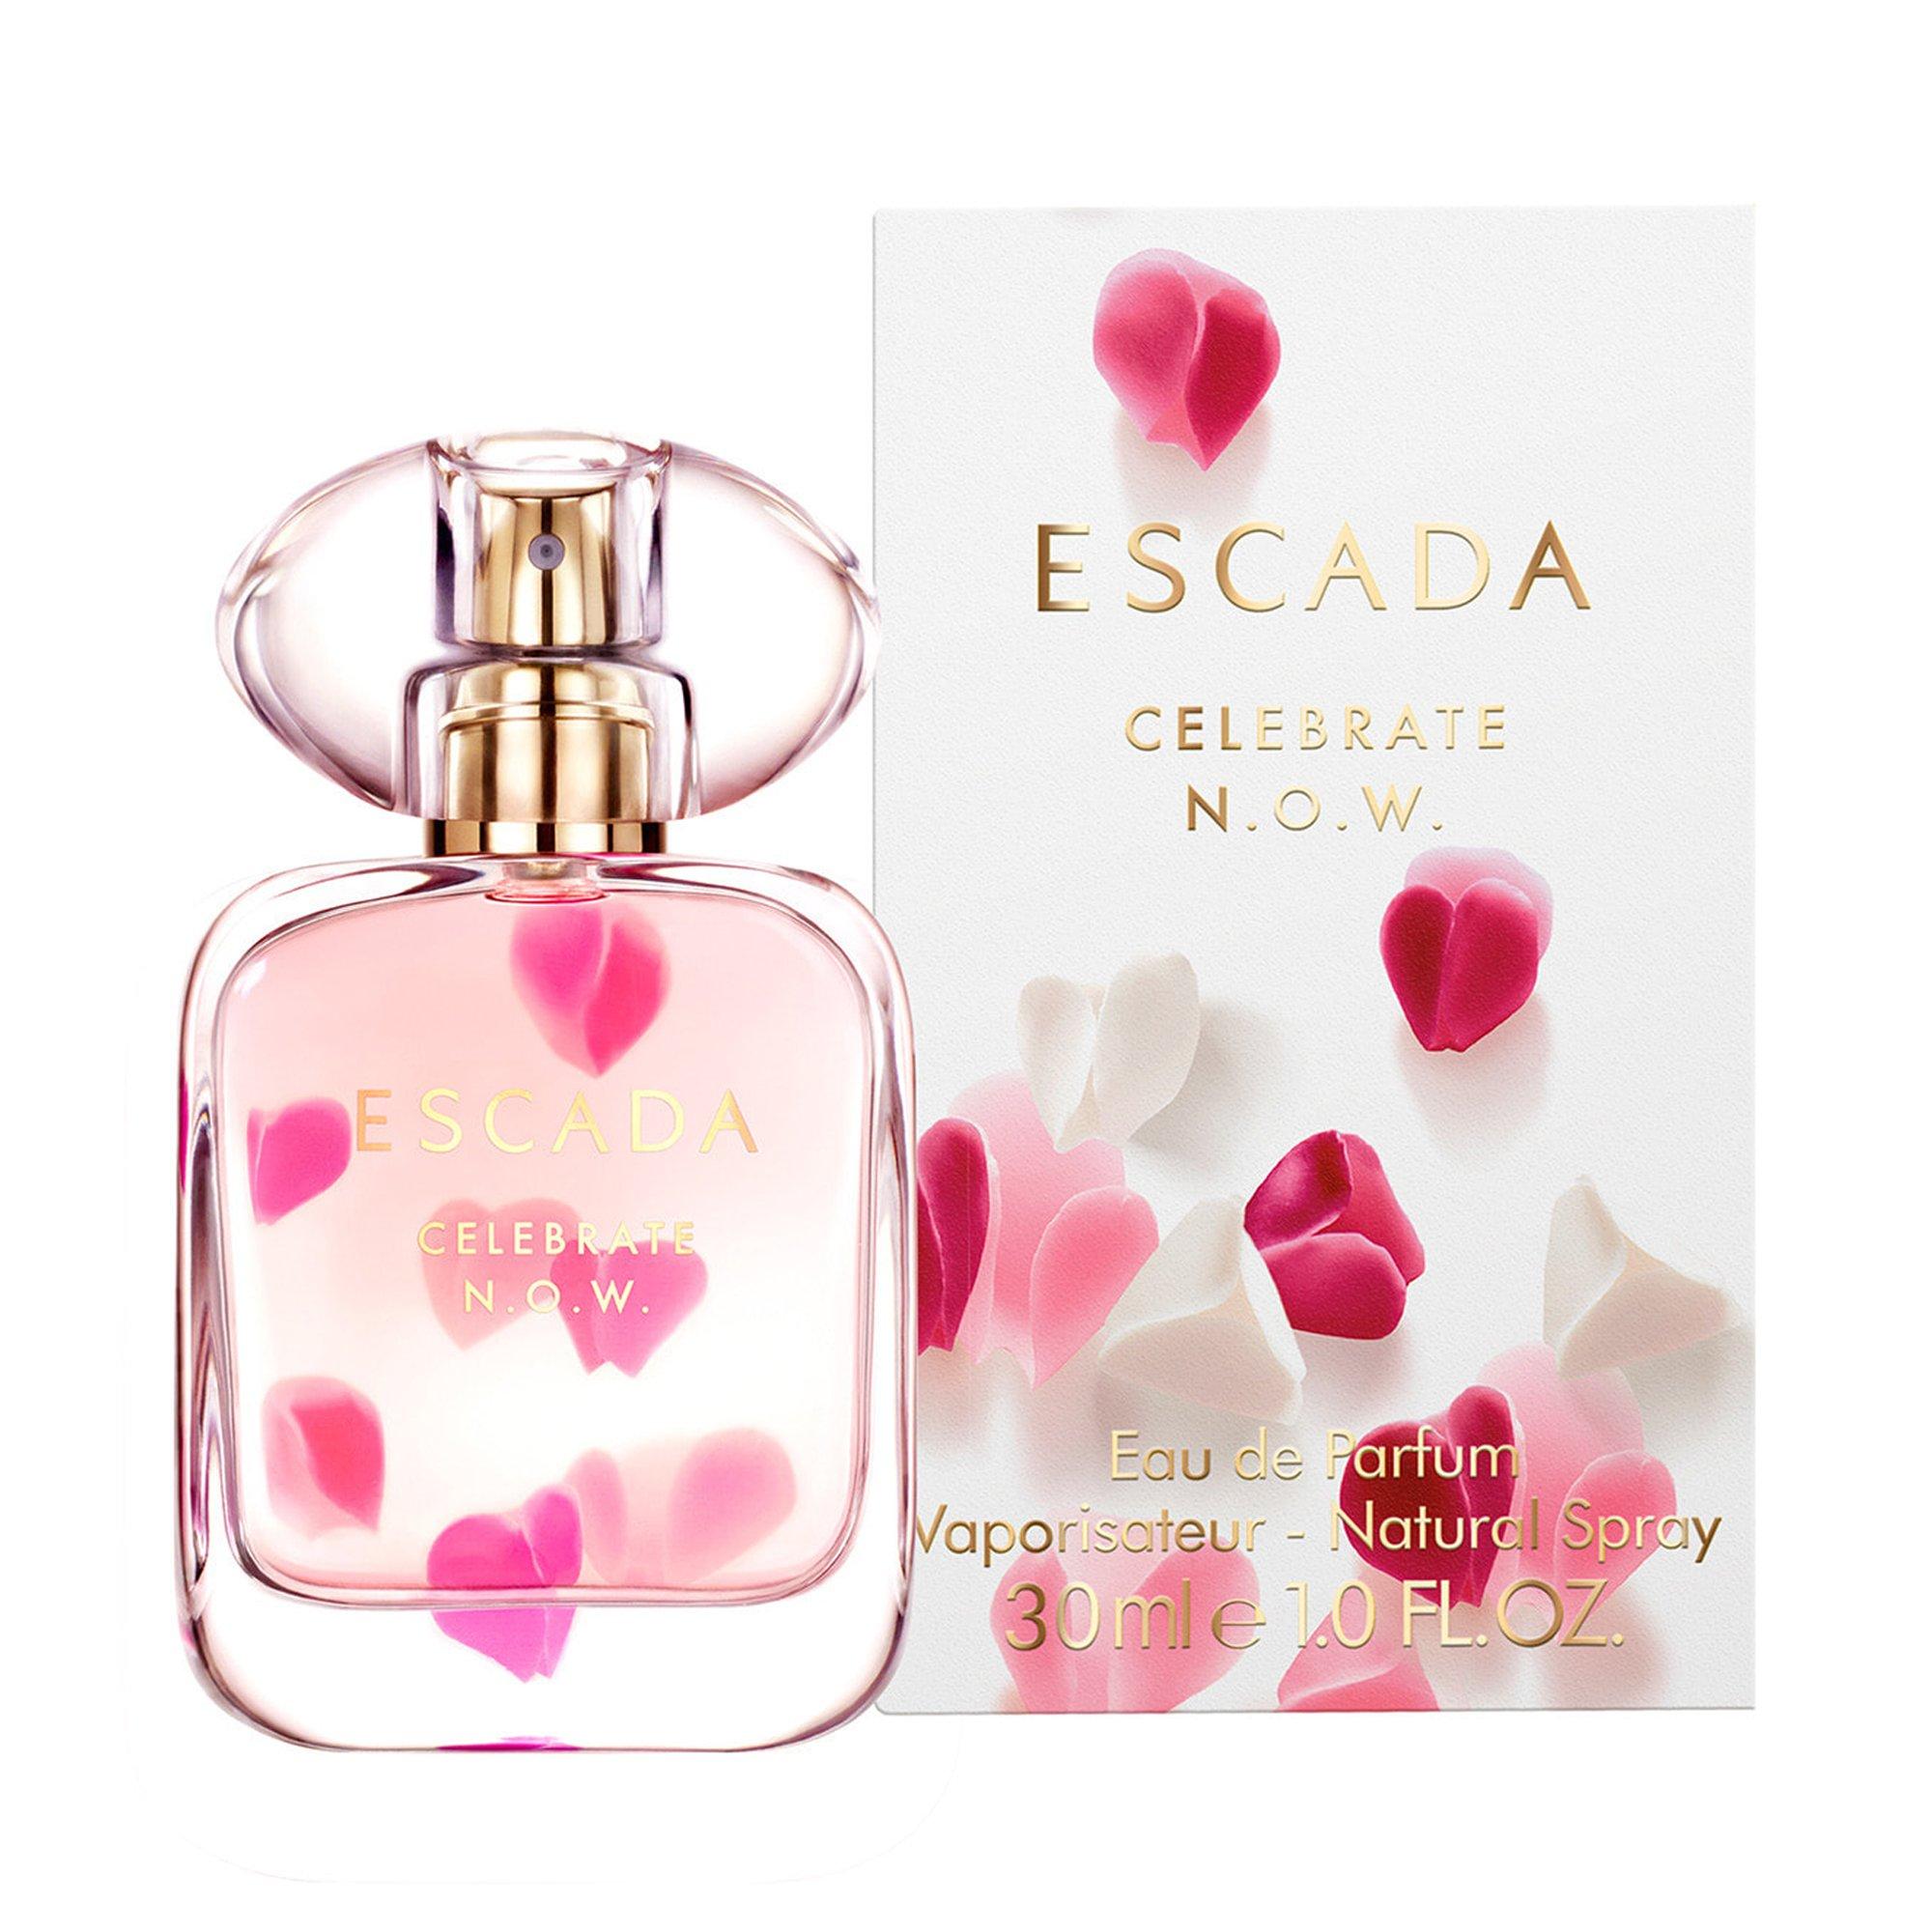 Image of ESCADA Celebrate N.O.W., Eau De Parfum - 30ml